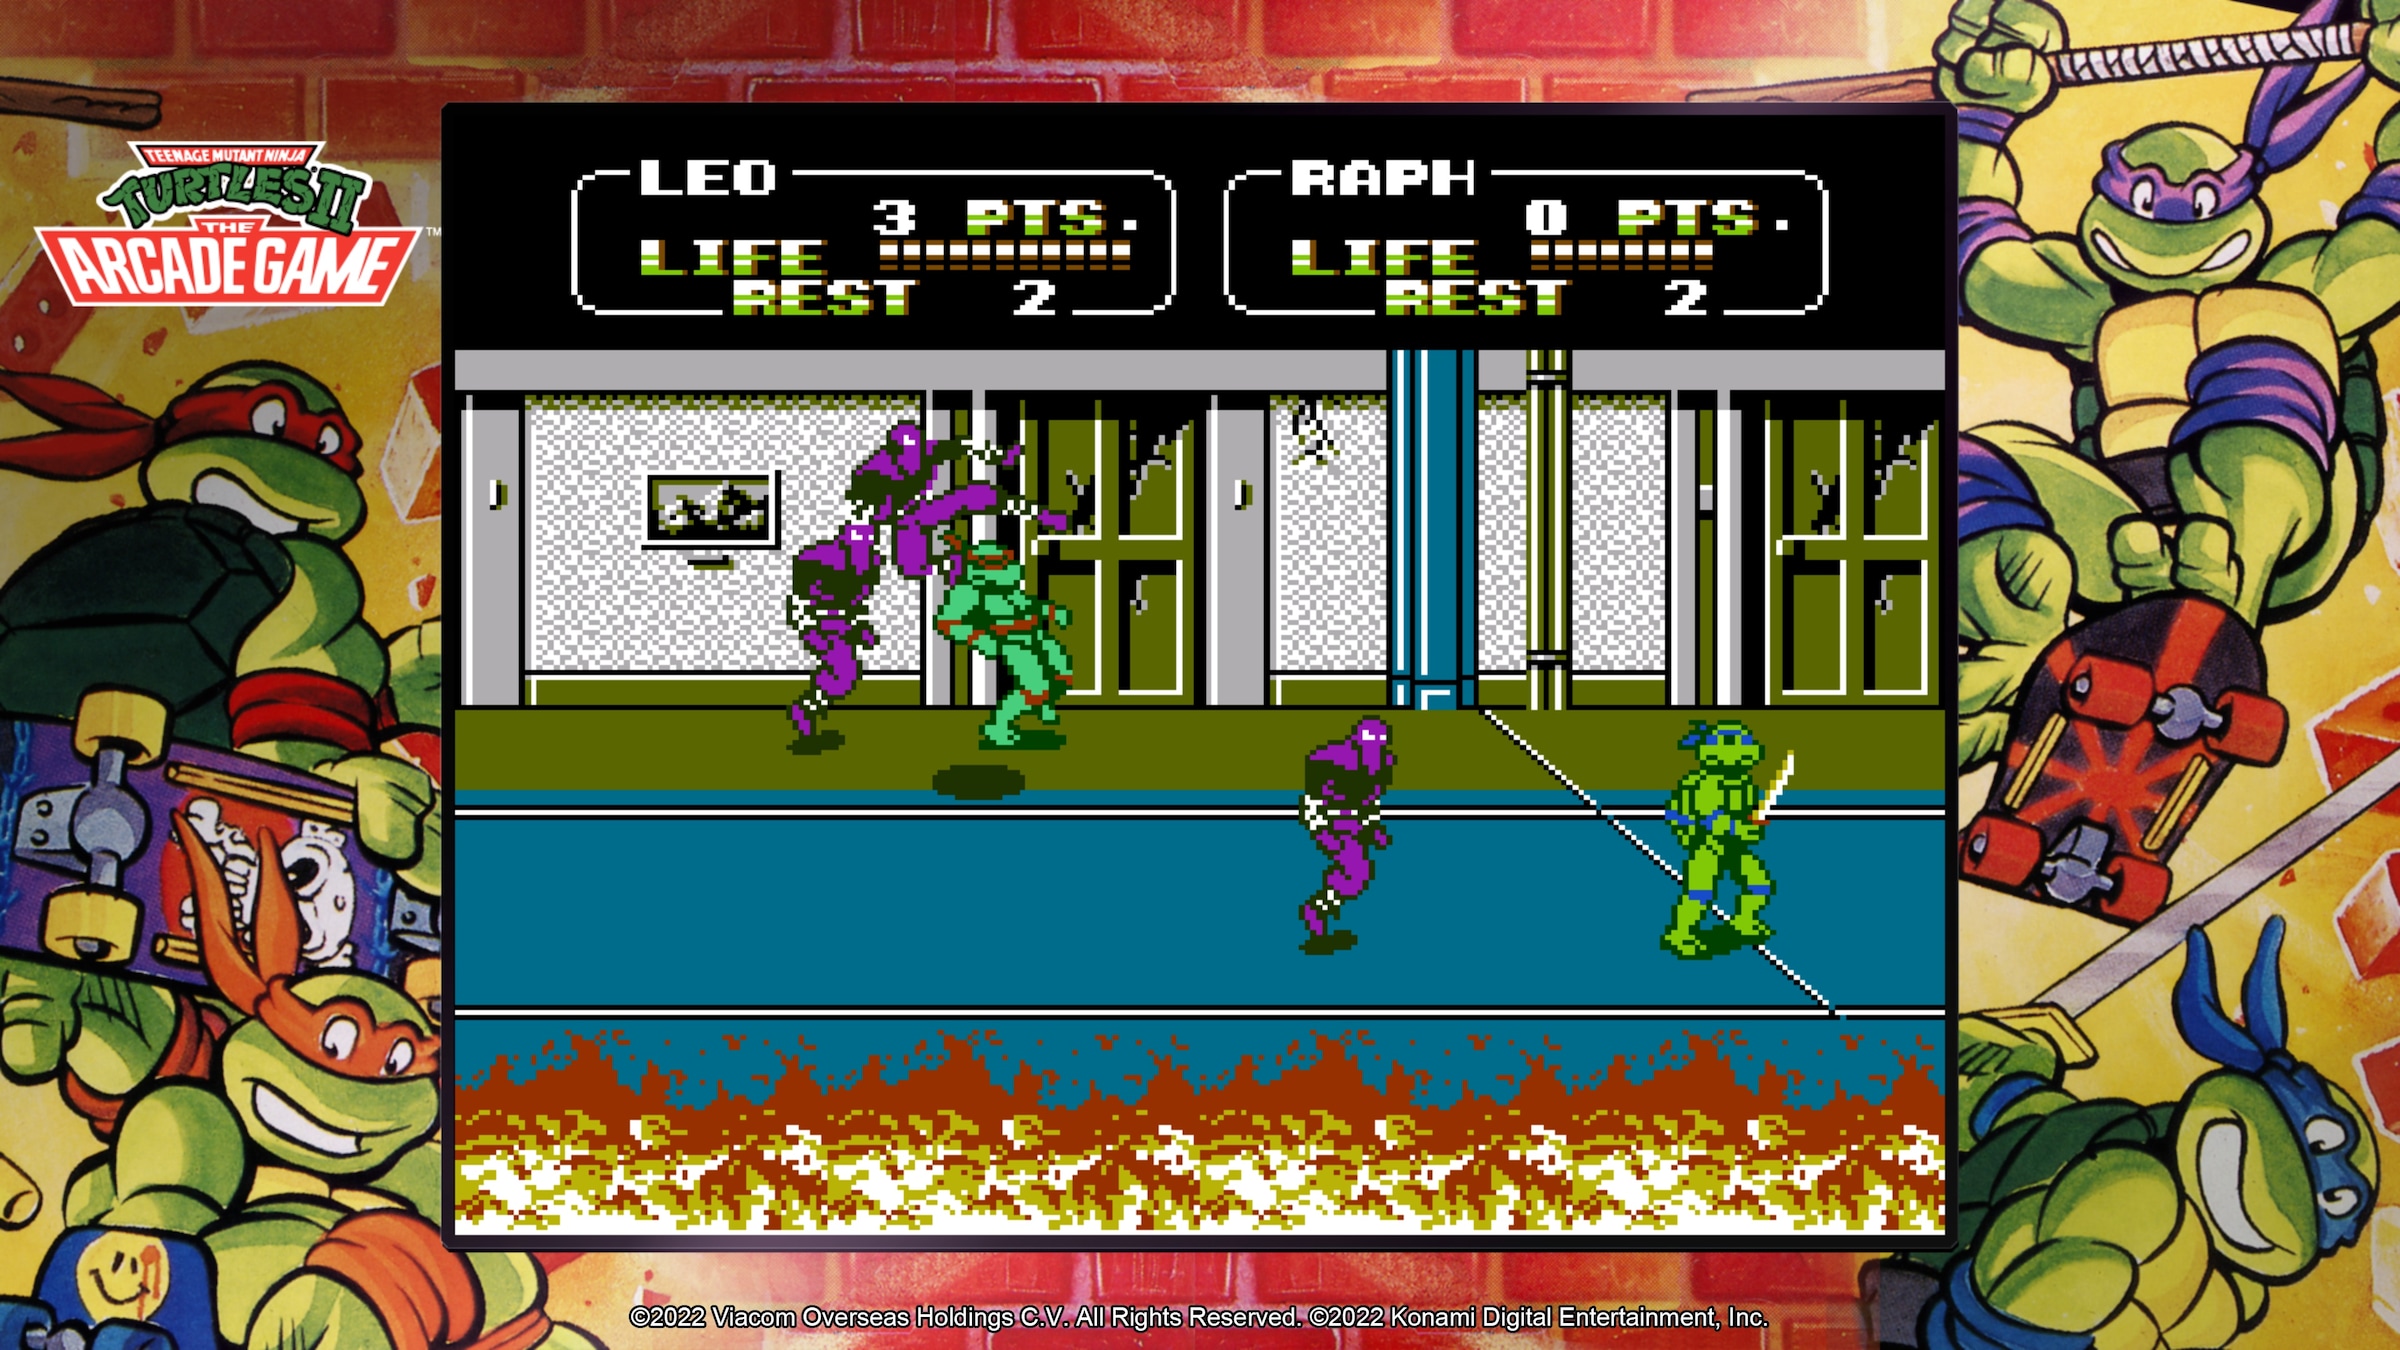 Konami Spielesoftware »Teenage Mutant Ninja Turtles - The Cowabunga Collection«, PlayStation 5